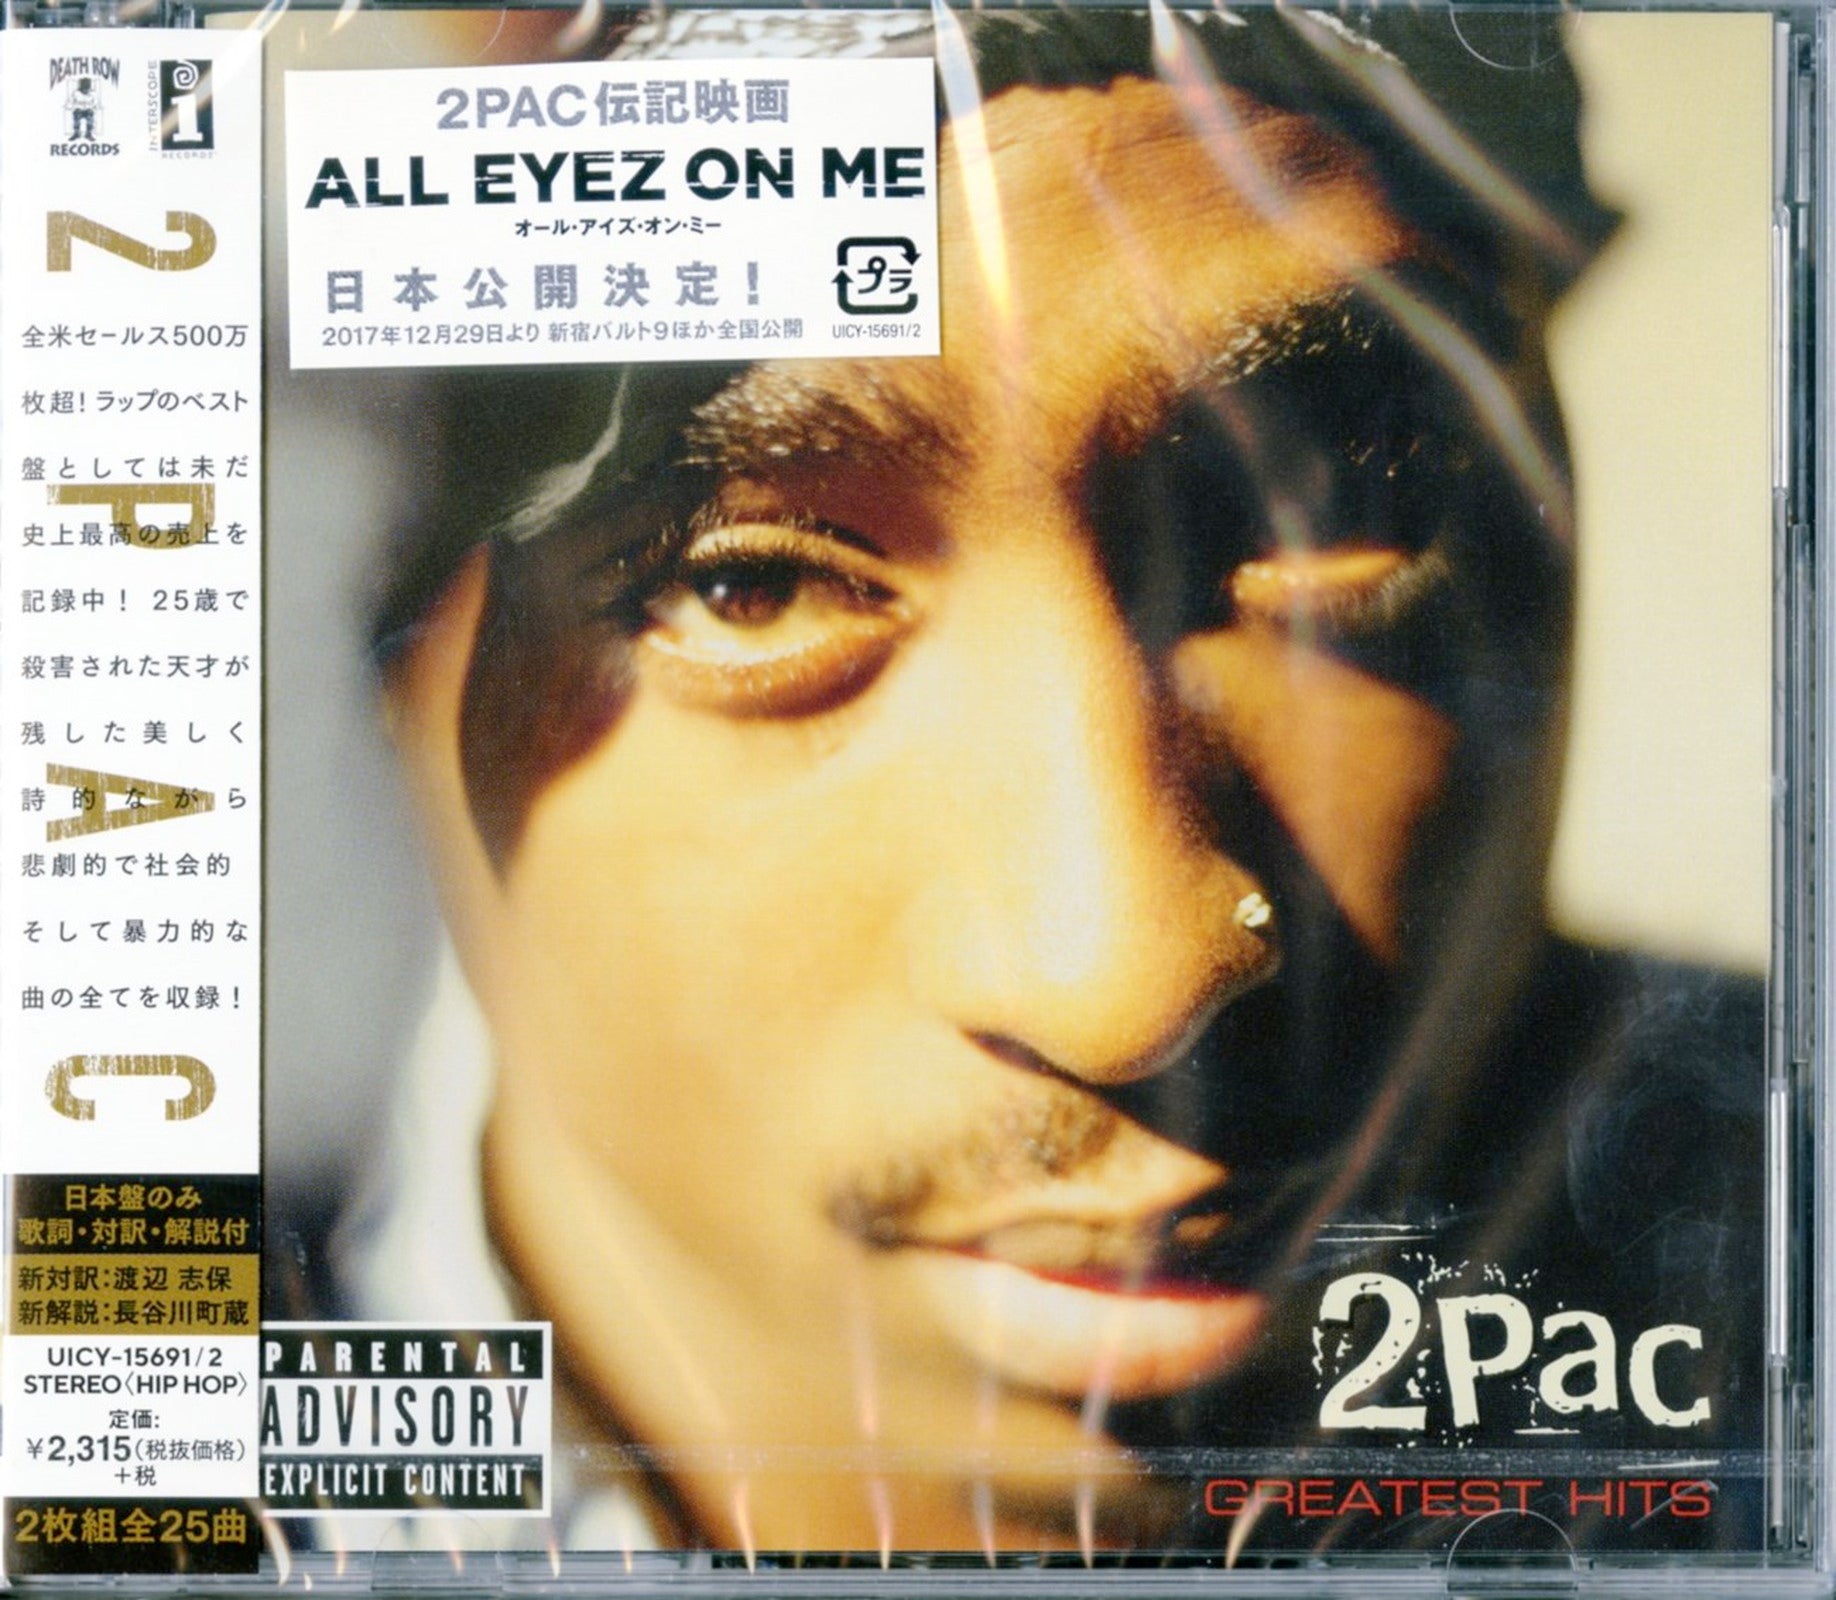 2Pac - 2Pac Greatest Hits - Japan 2 CD – CDs Vinyl Japan Store 2Pac, CD ...